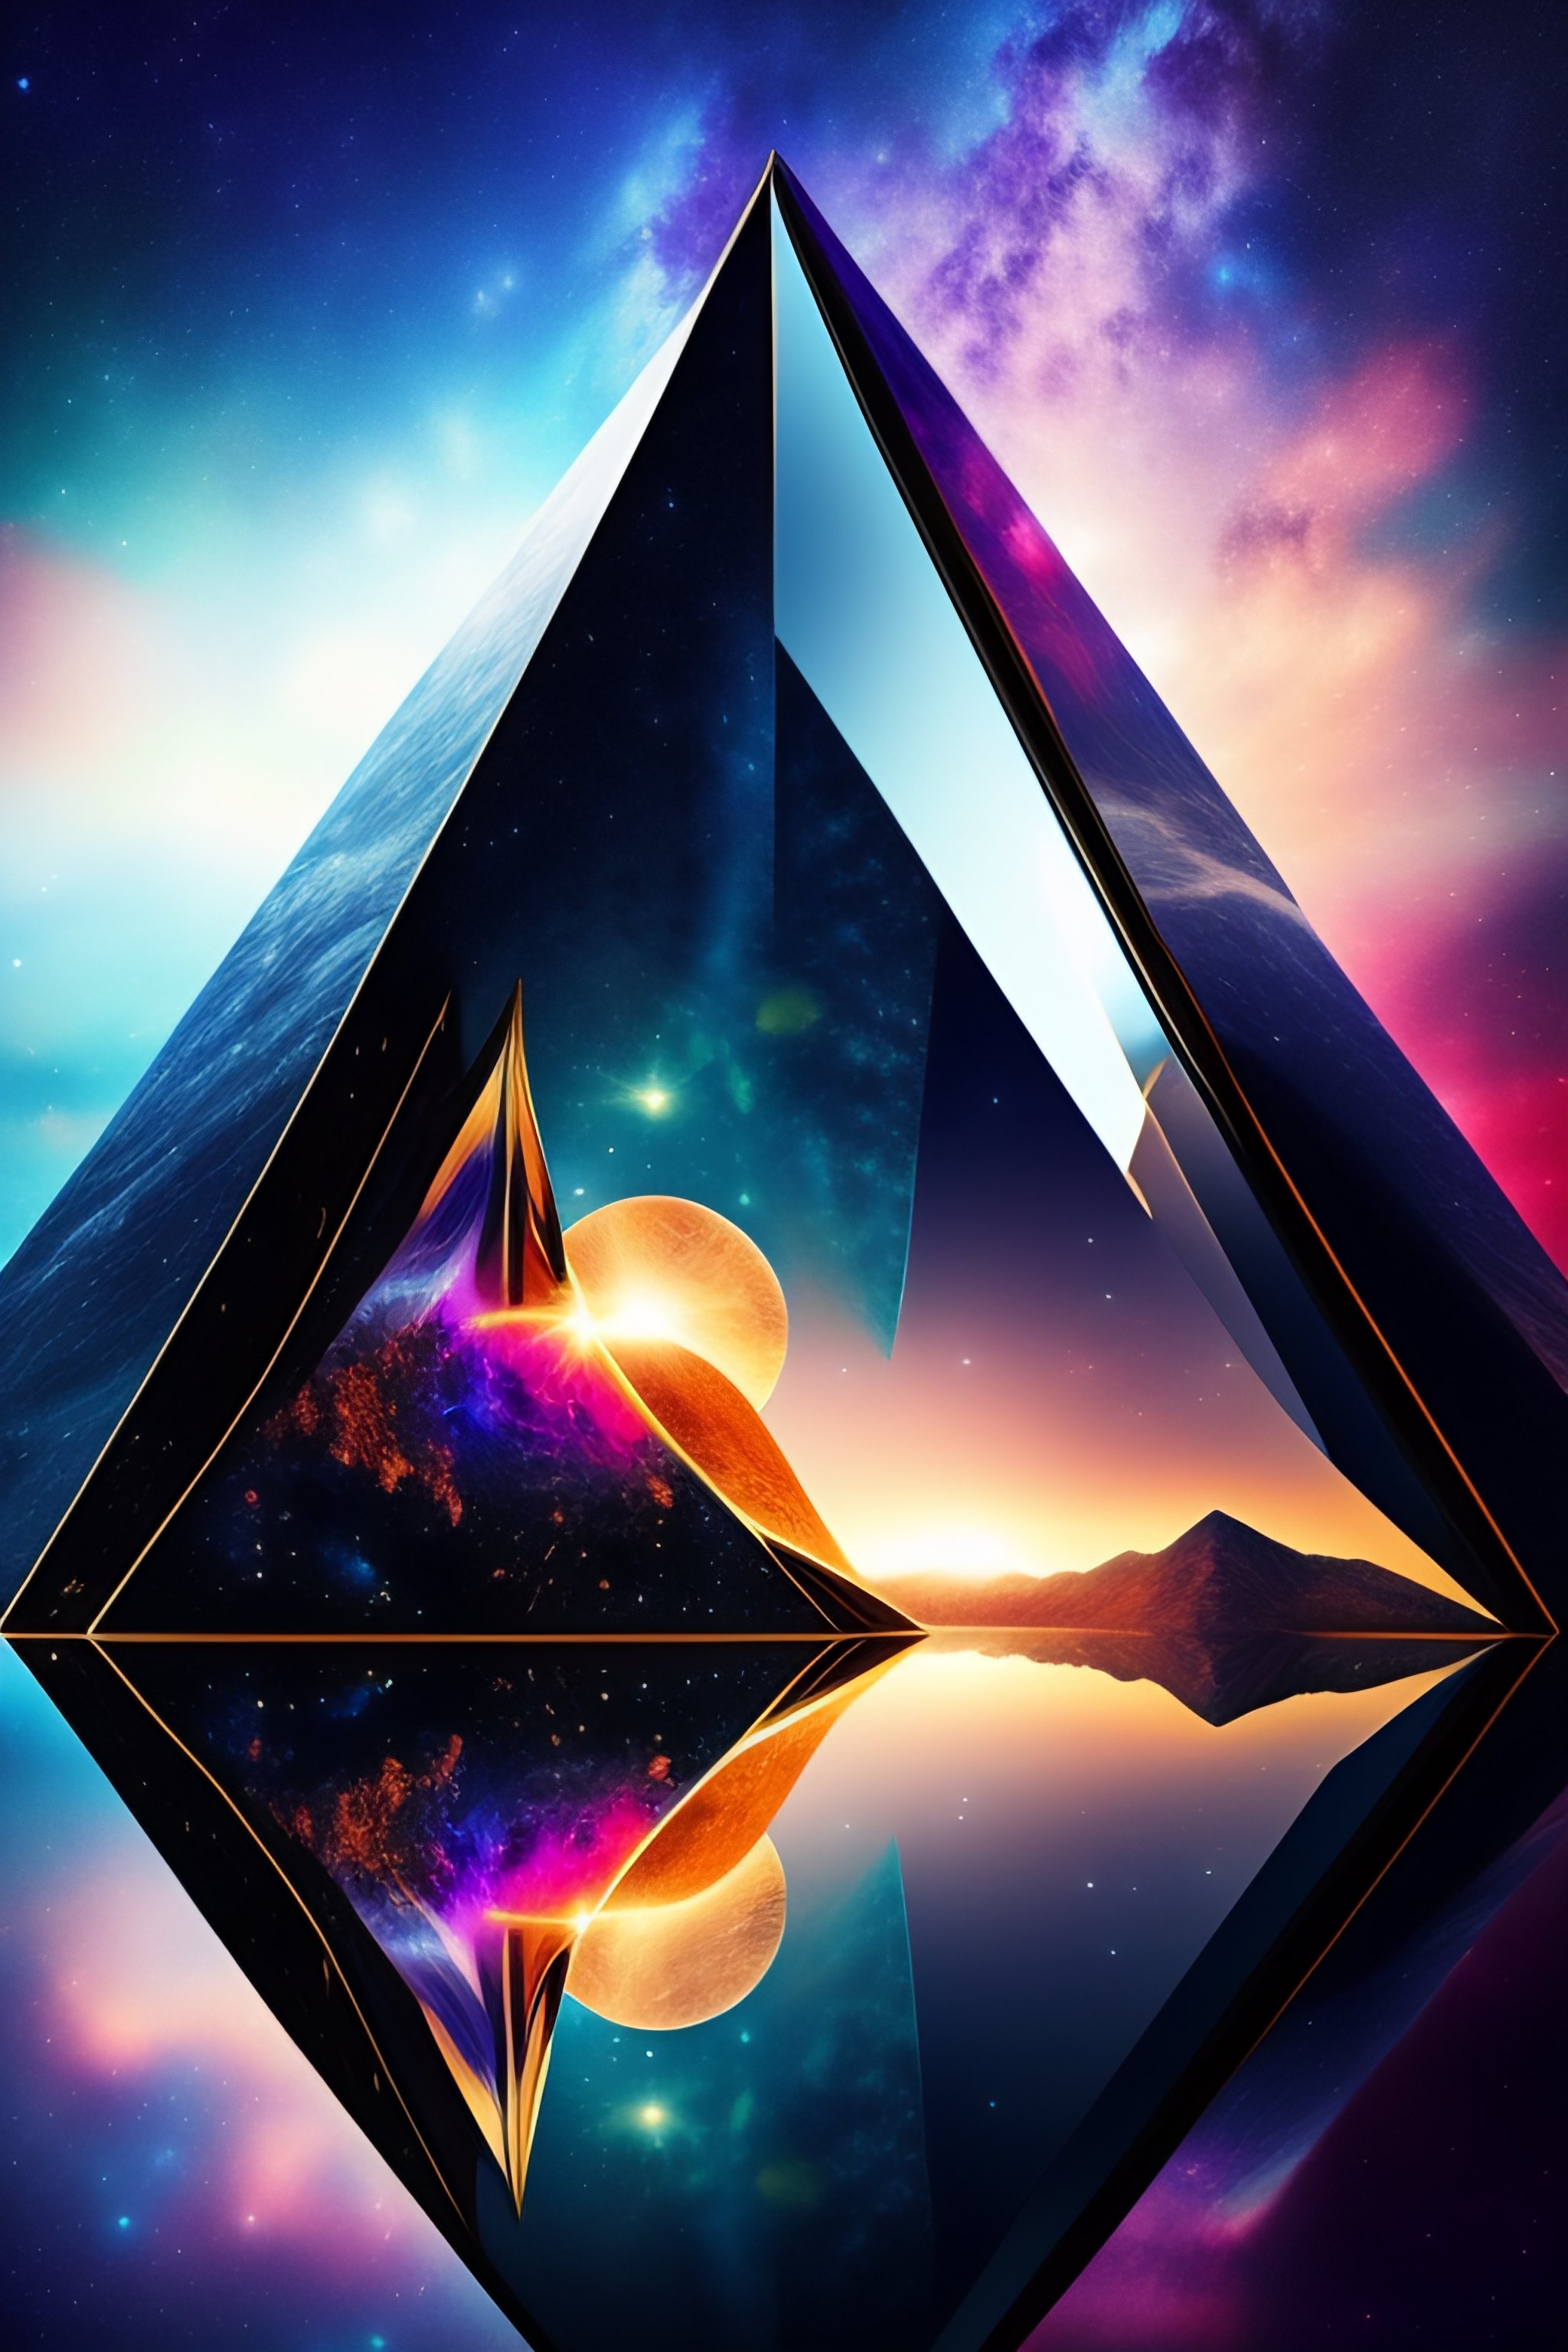 Lexica - Mirror pyramids in galaxy